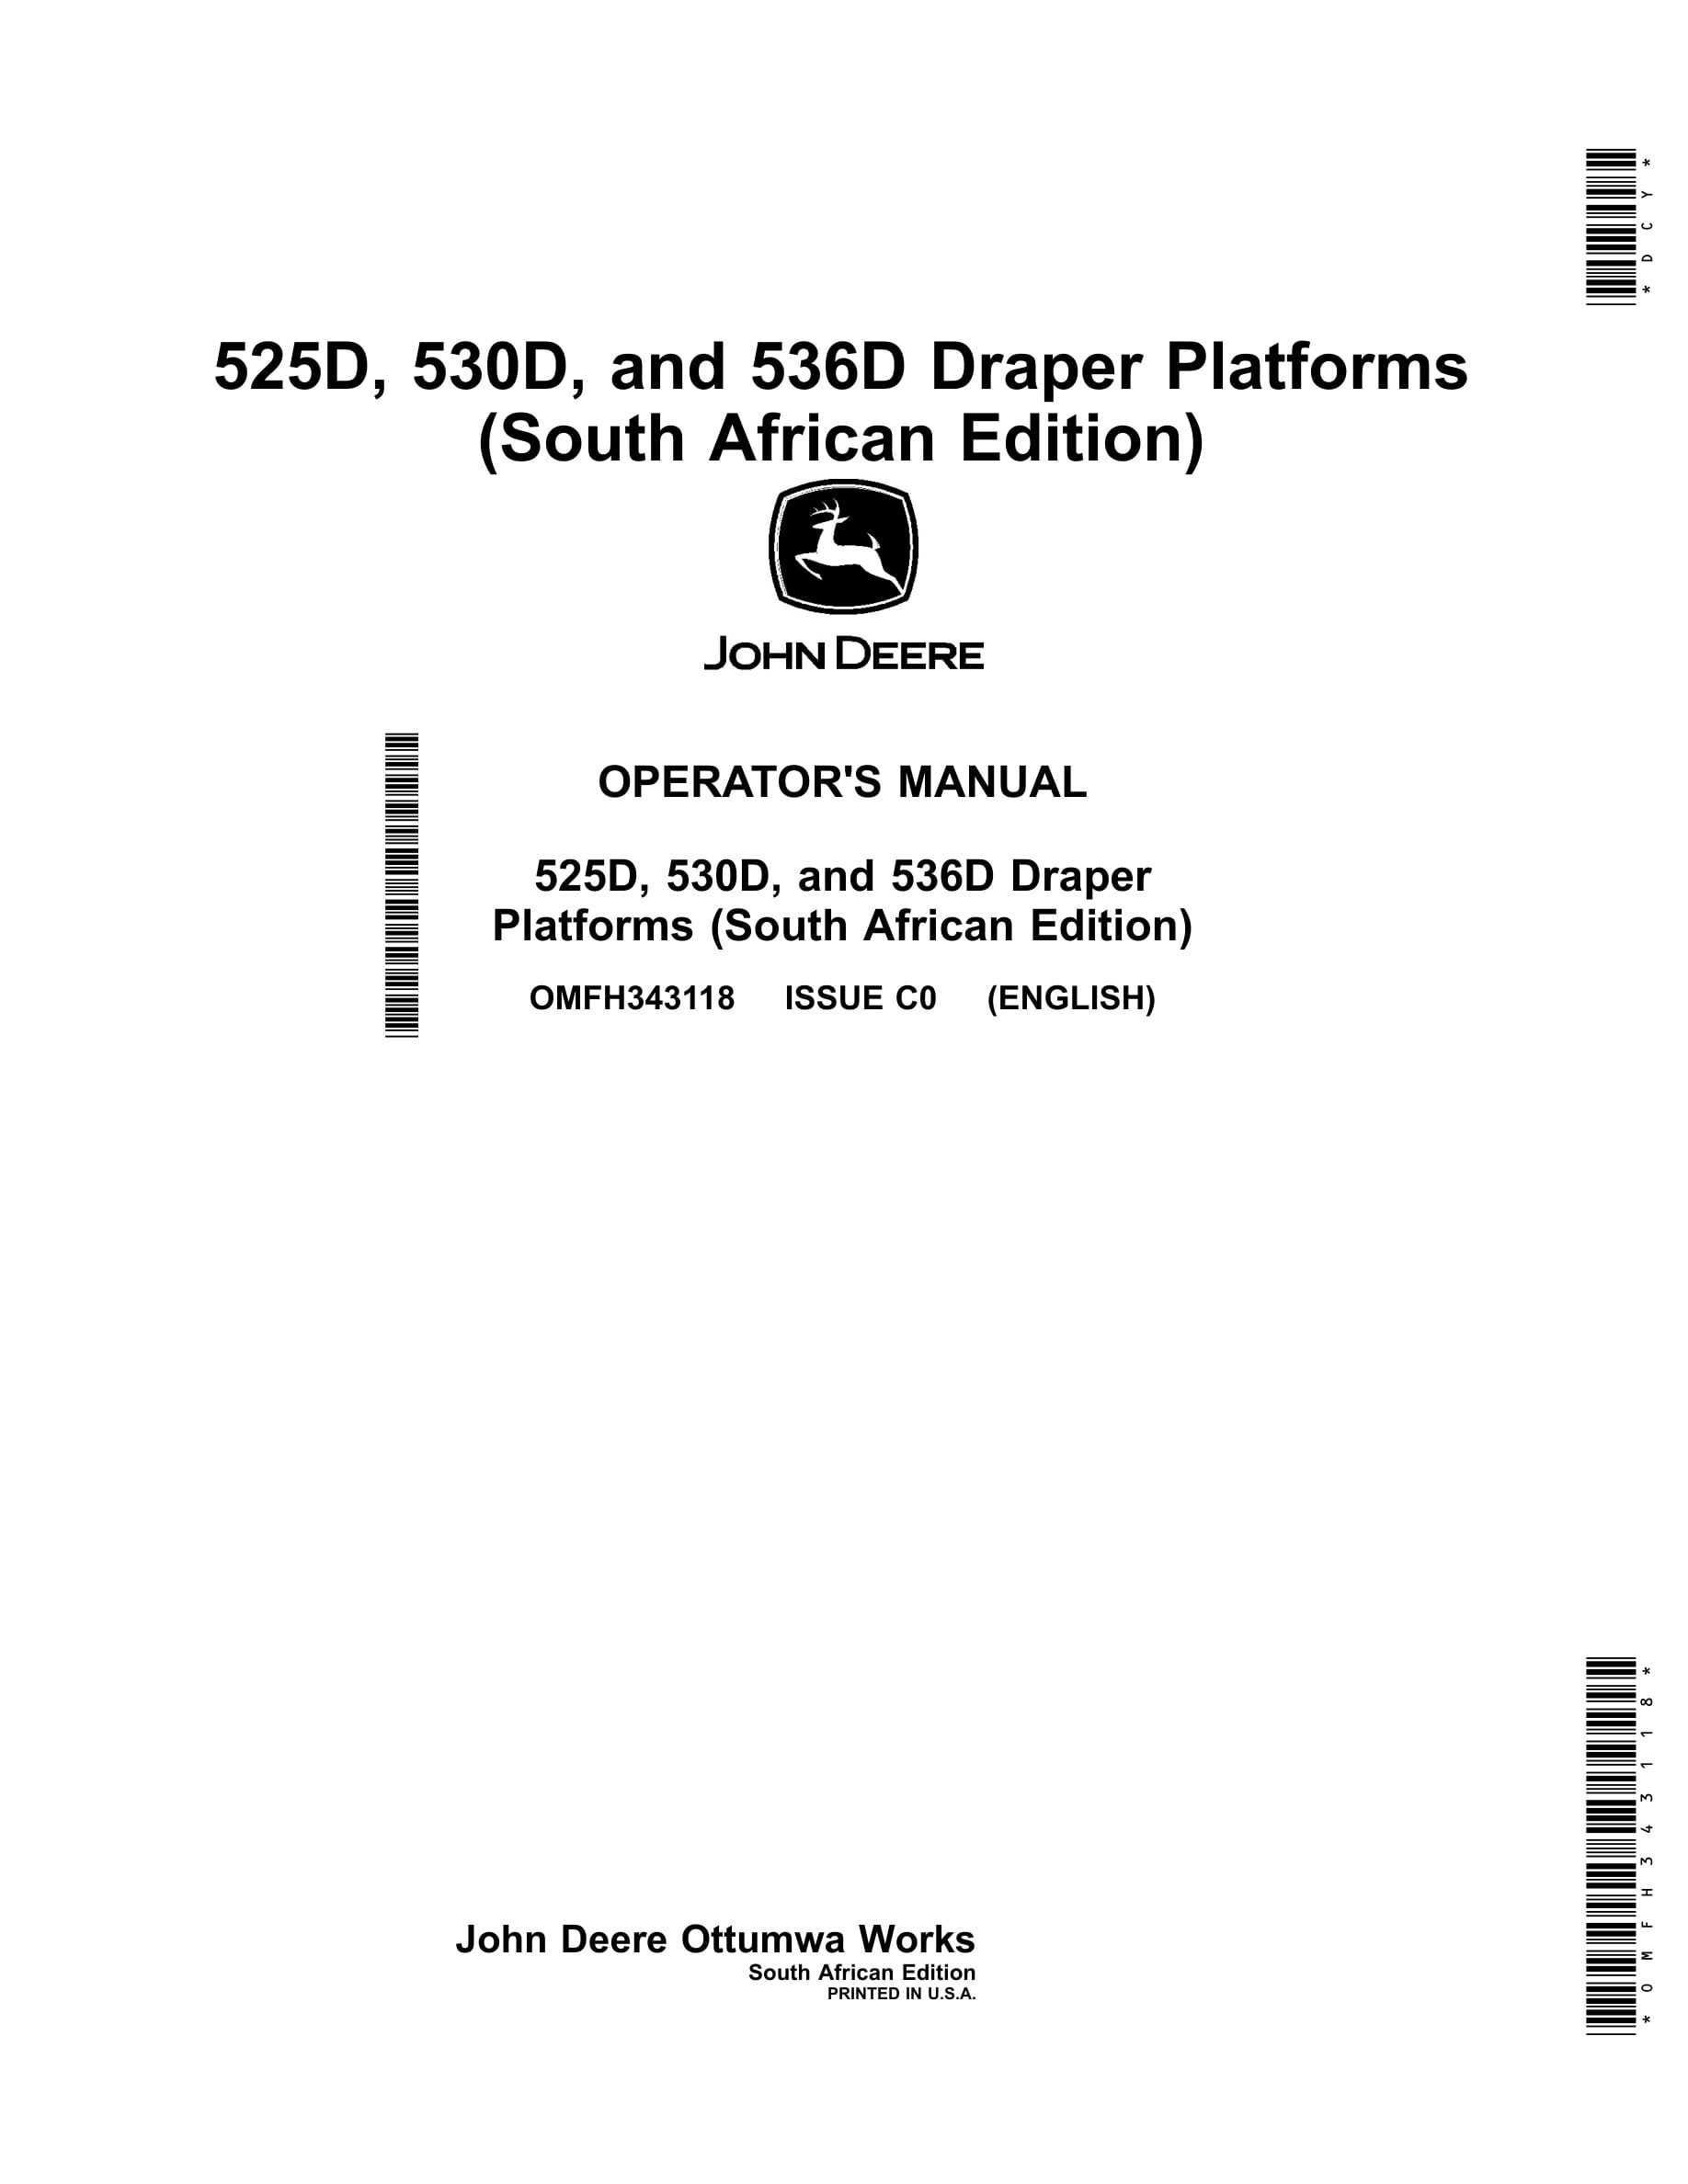 John Deere 525D, 530D, and 536D Draper Platforms Operator Manual OMFH343118-1